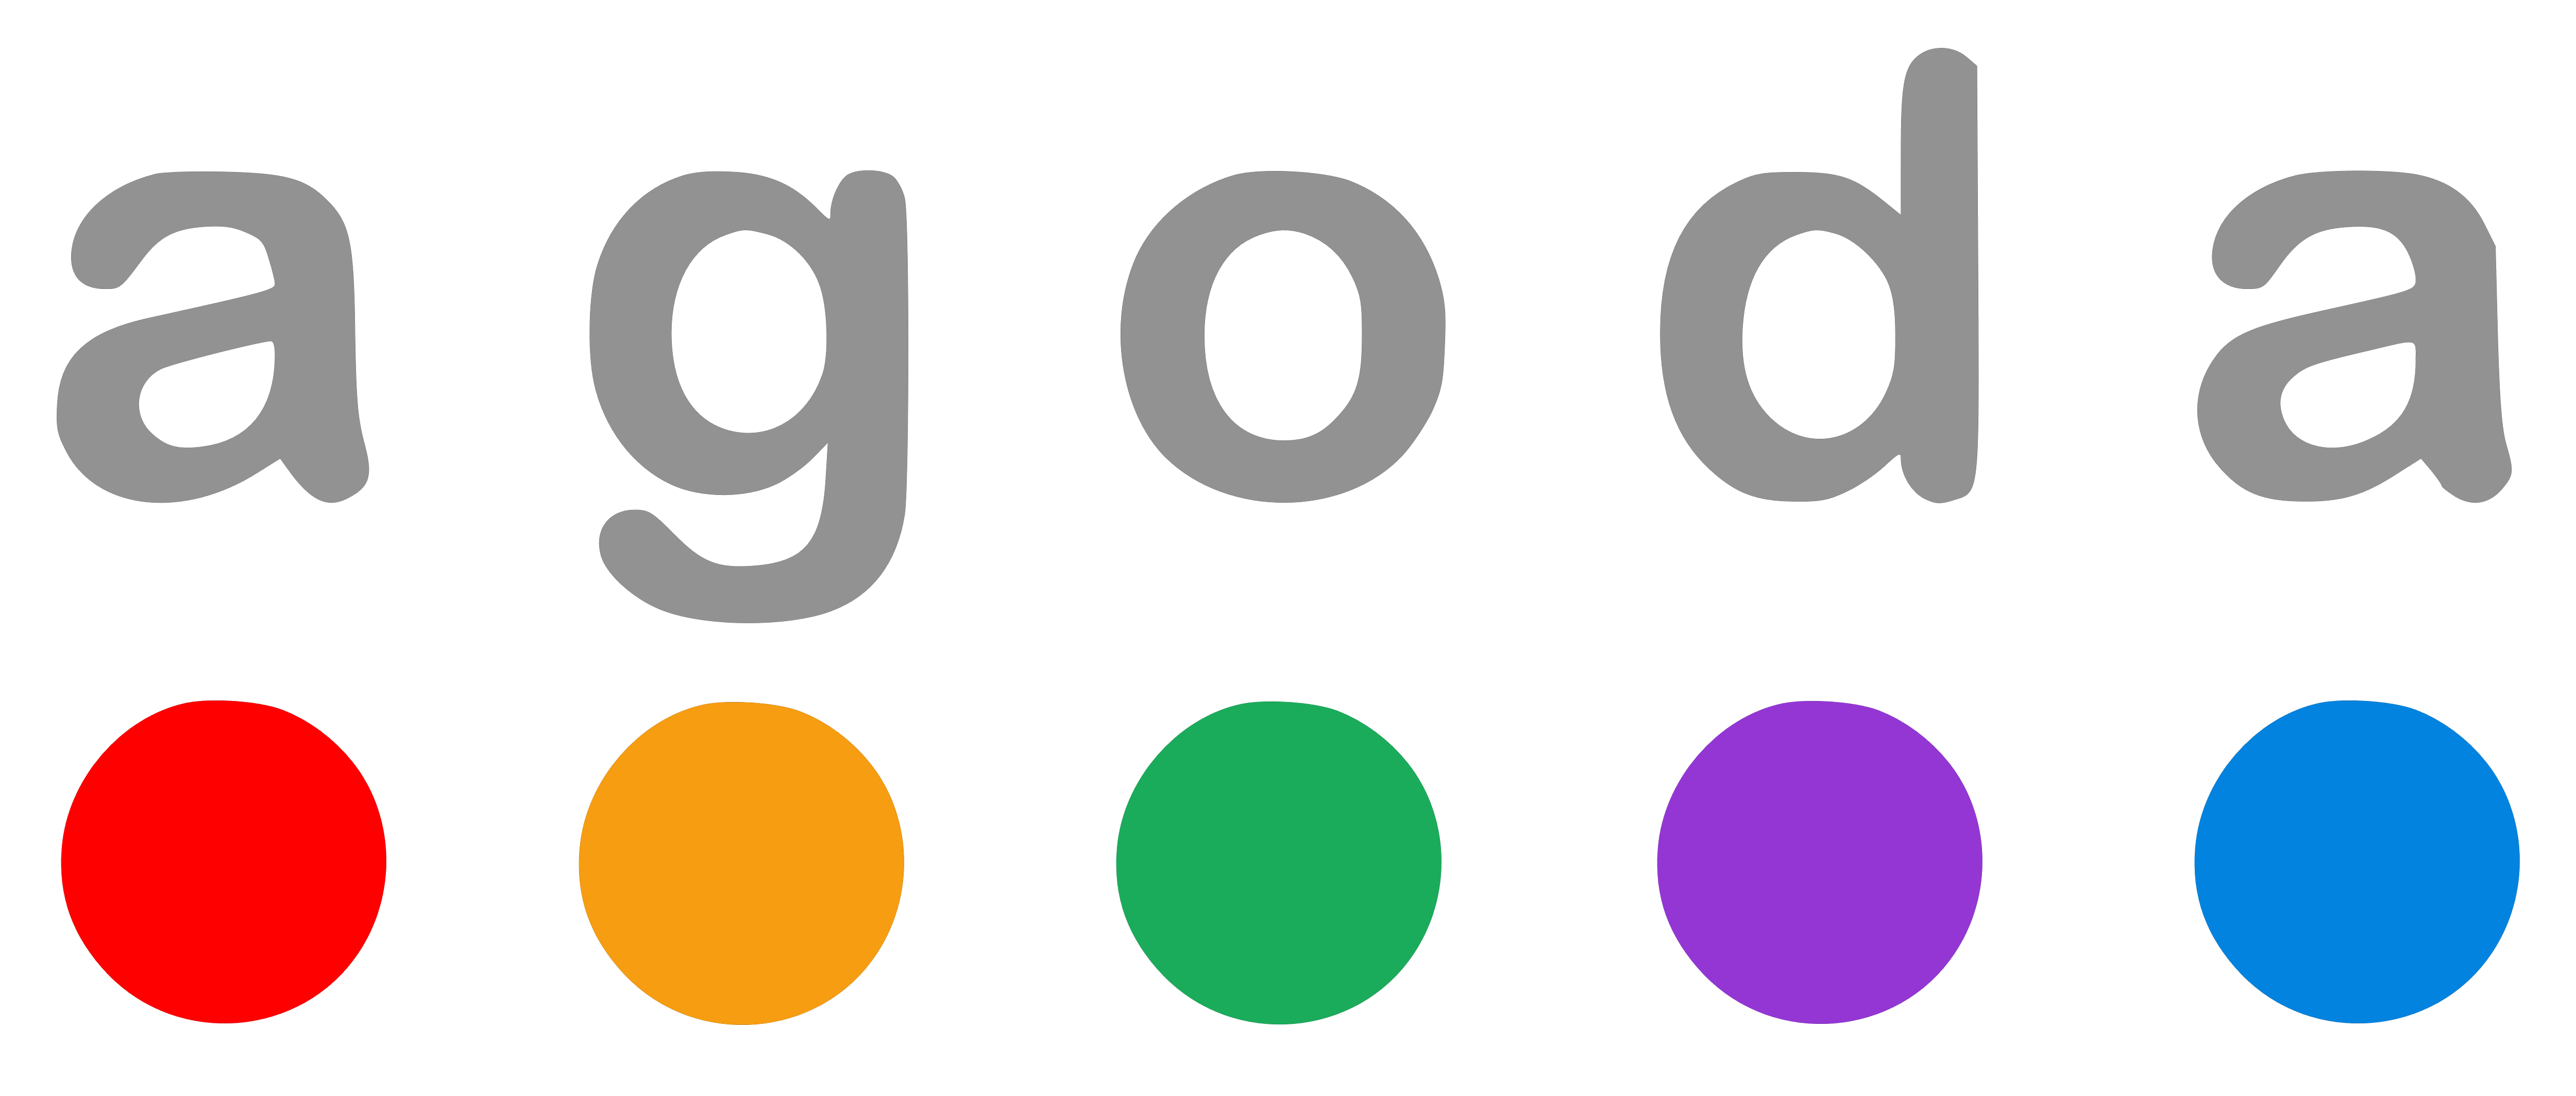 Agoda – Logos Download